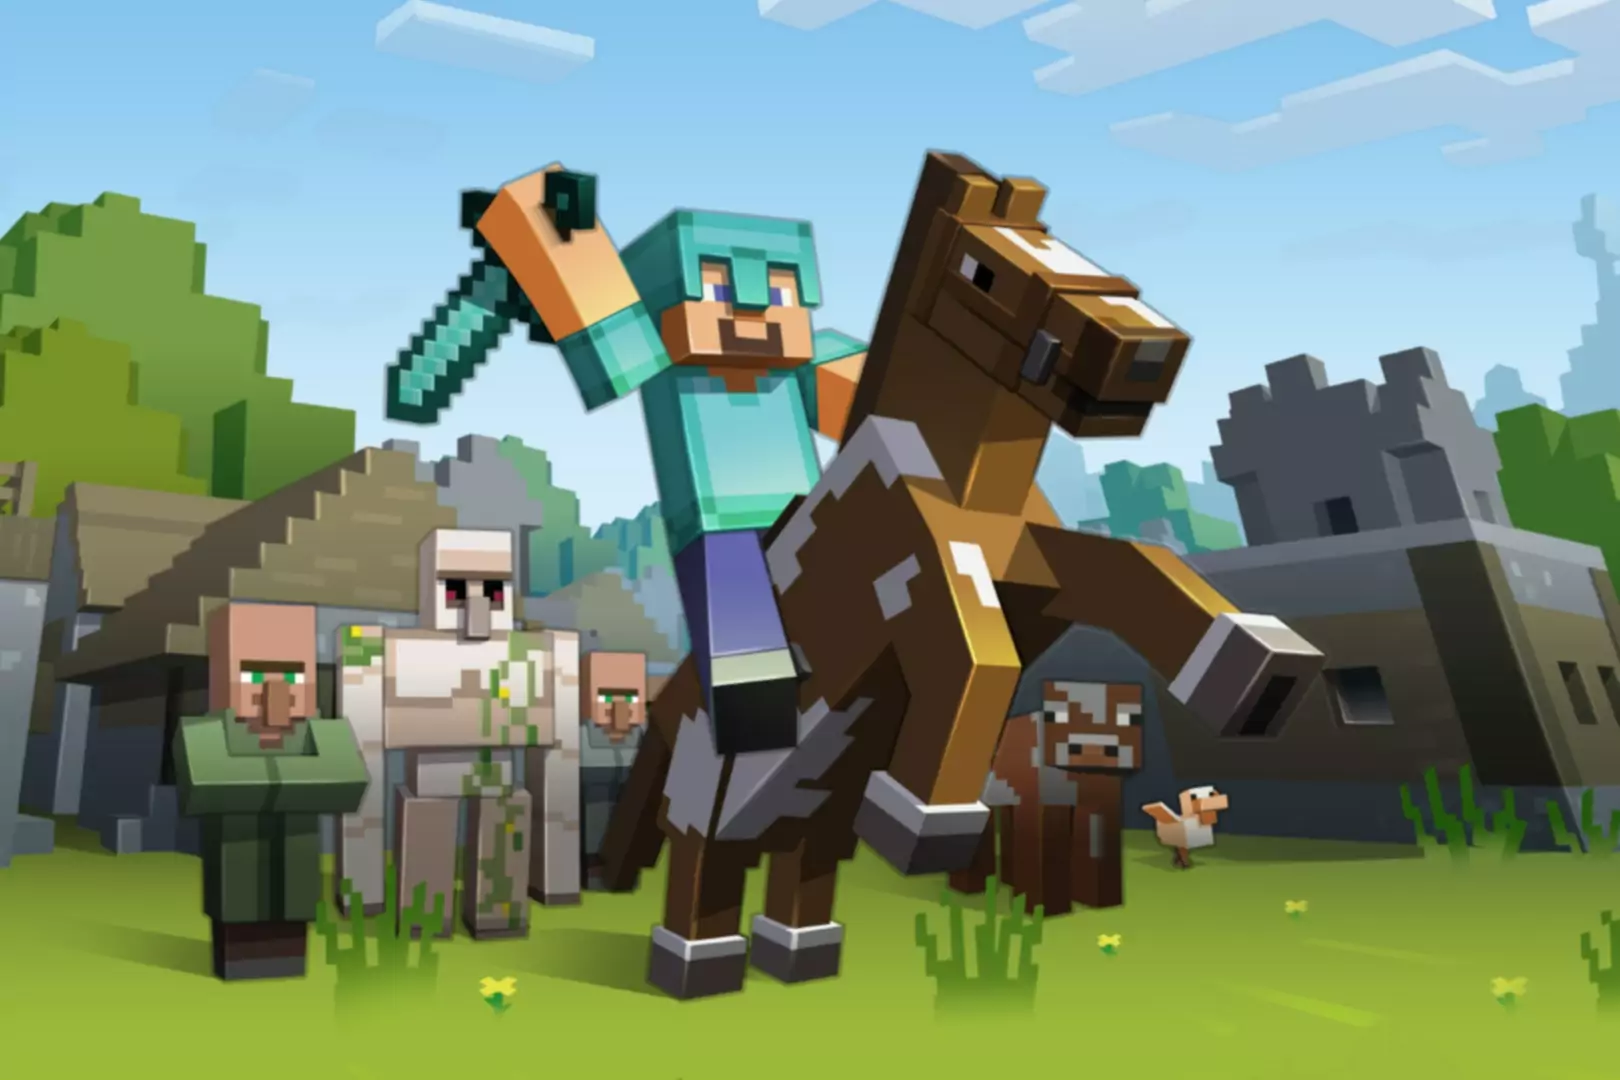 Minecraft游戏的截图，人物骑着马，挥舞着剑。